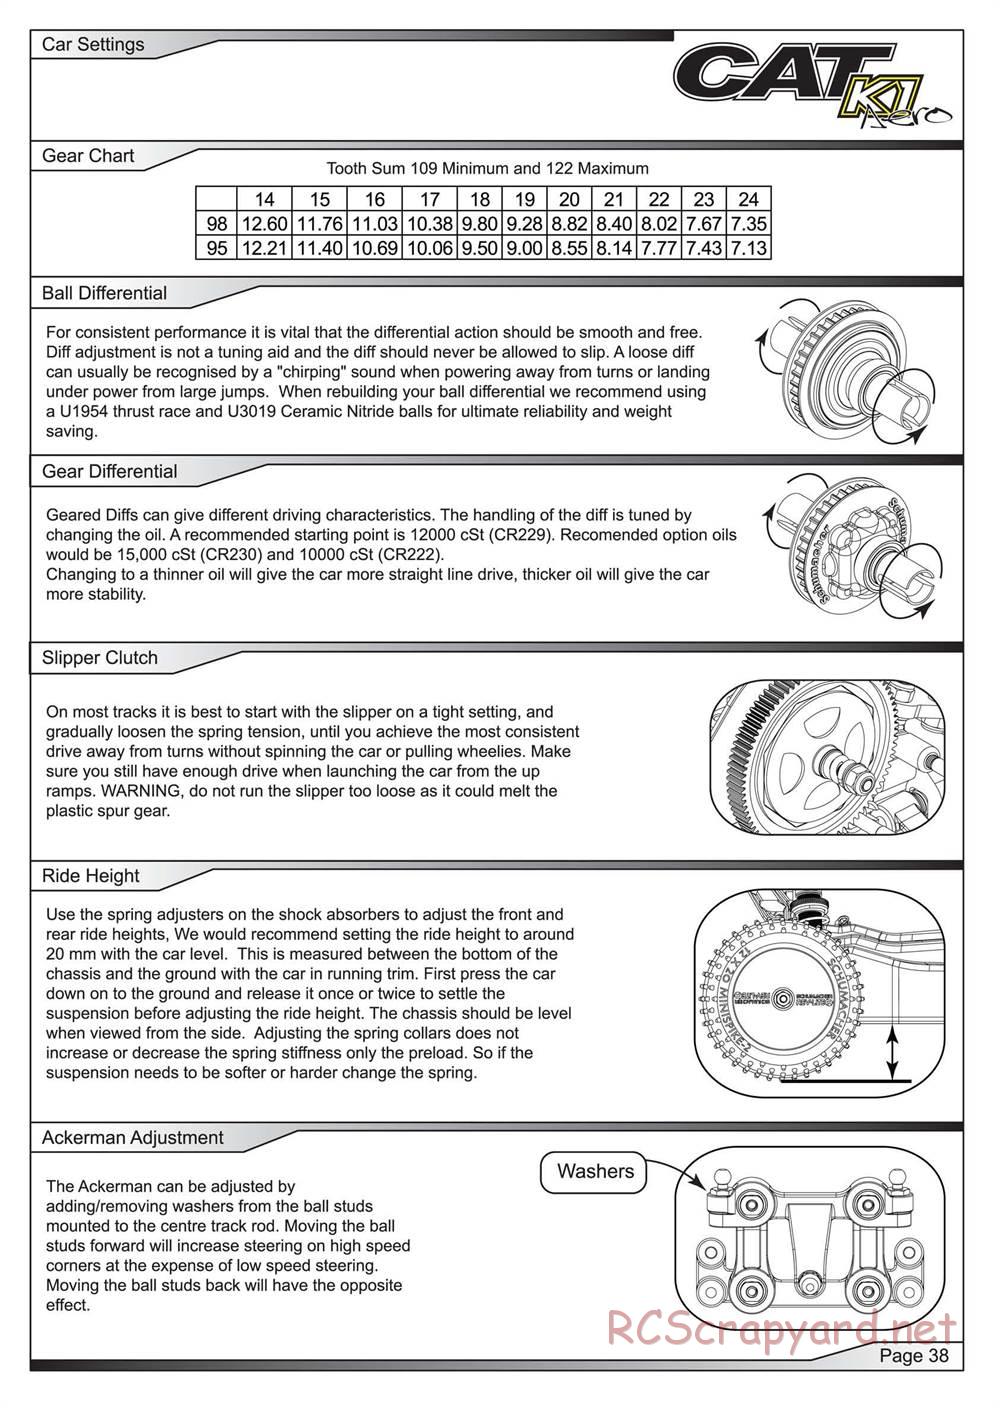 Schumacher - Cat K1 Aero - Manual - Page 39